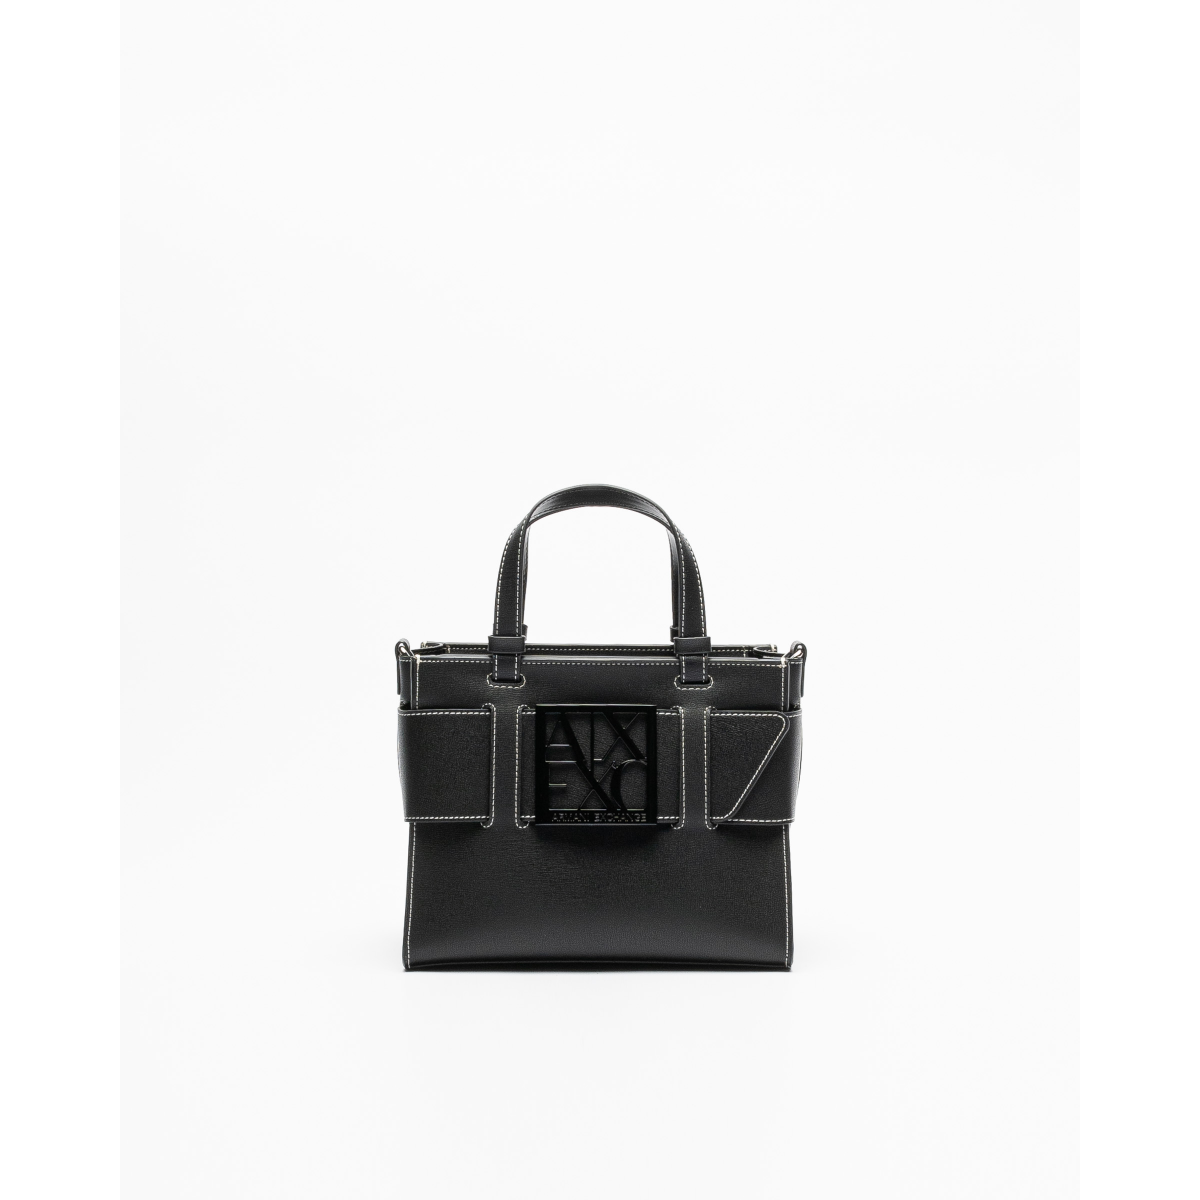 Armani Exchange Black Purse Crossbody Shoulder Bag | eBay